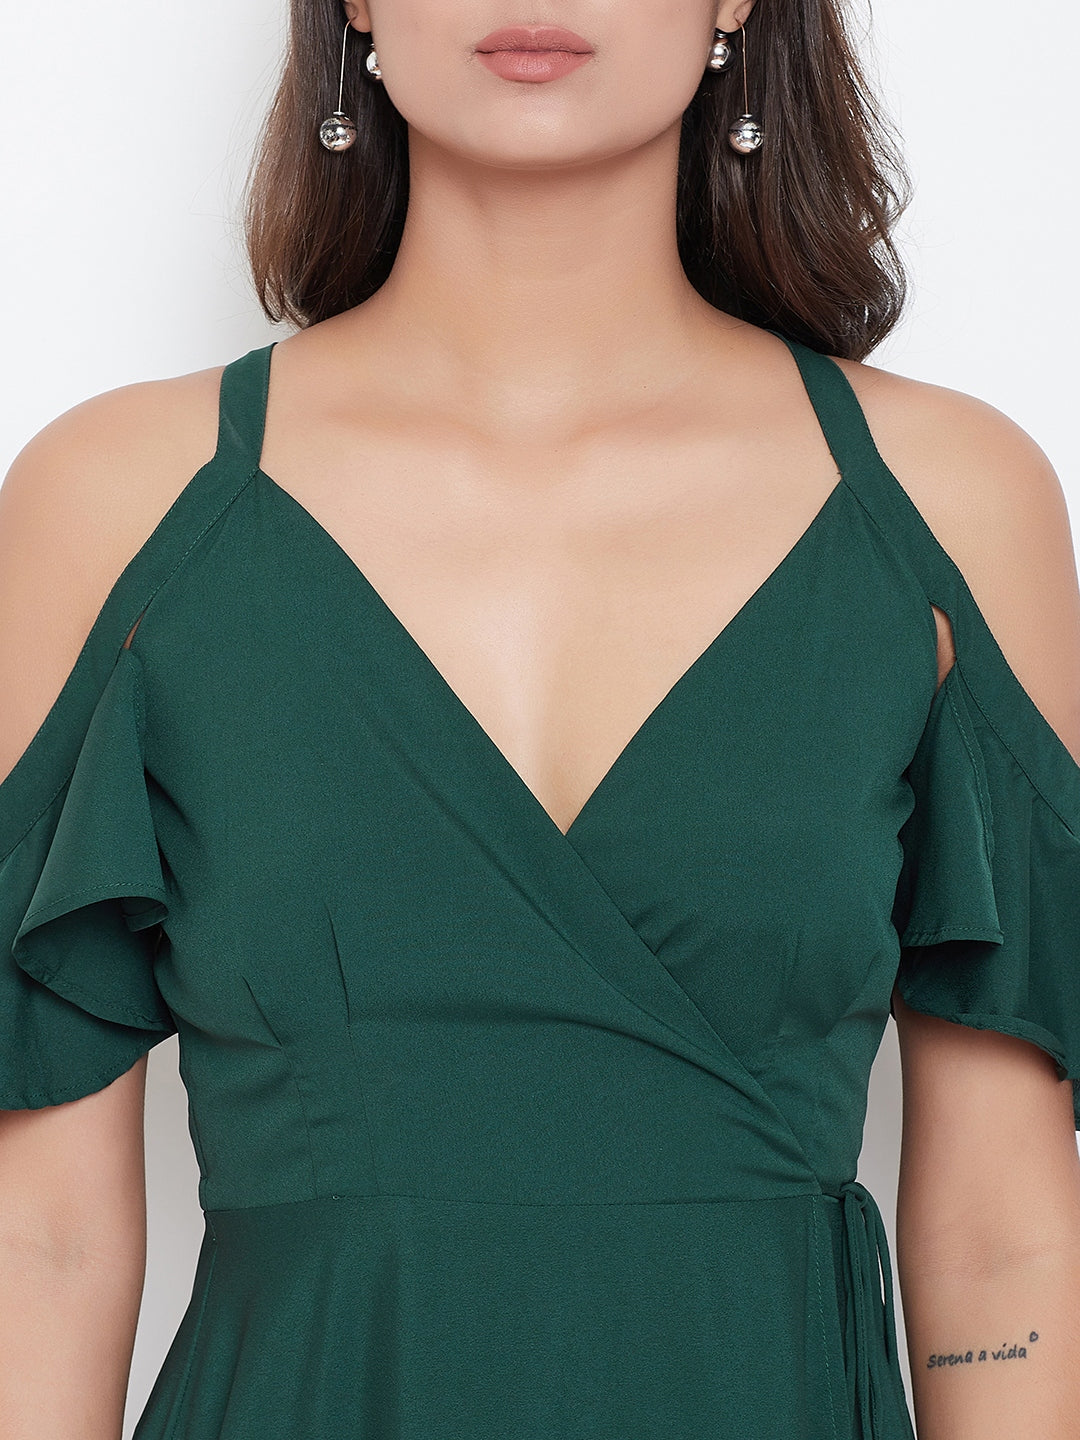 Berrylush Women Solid Green V-Neck Cold-Shoulder Maxi Dress